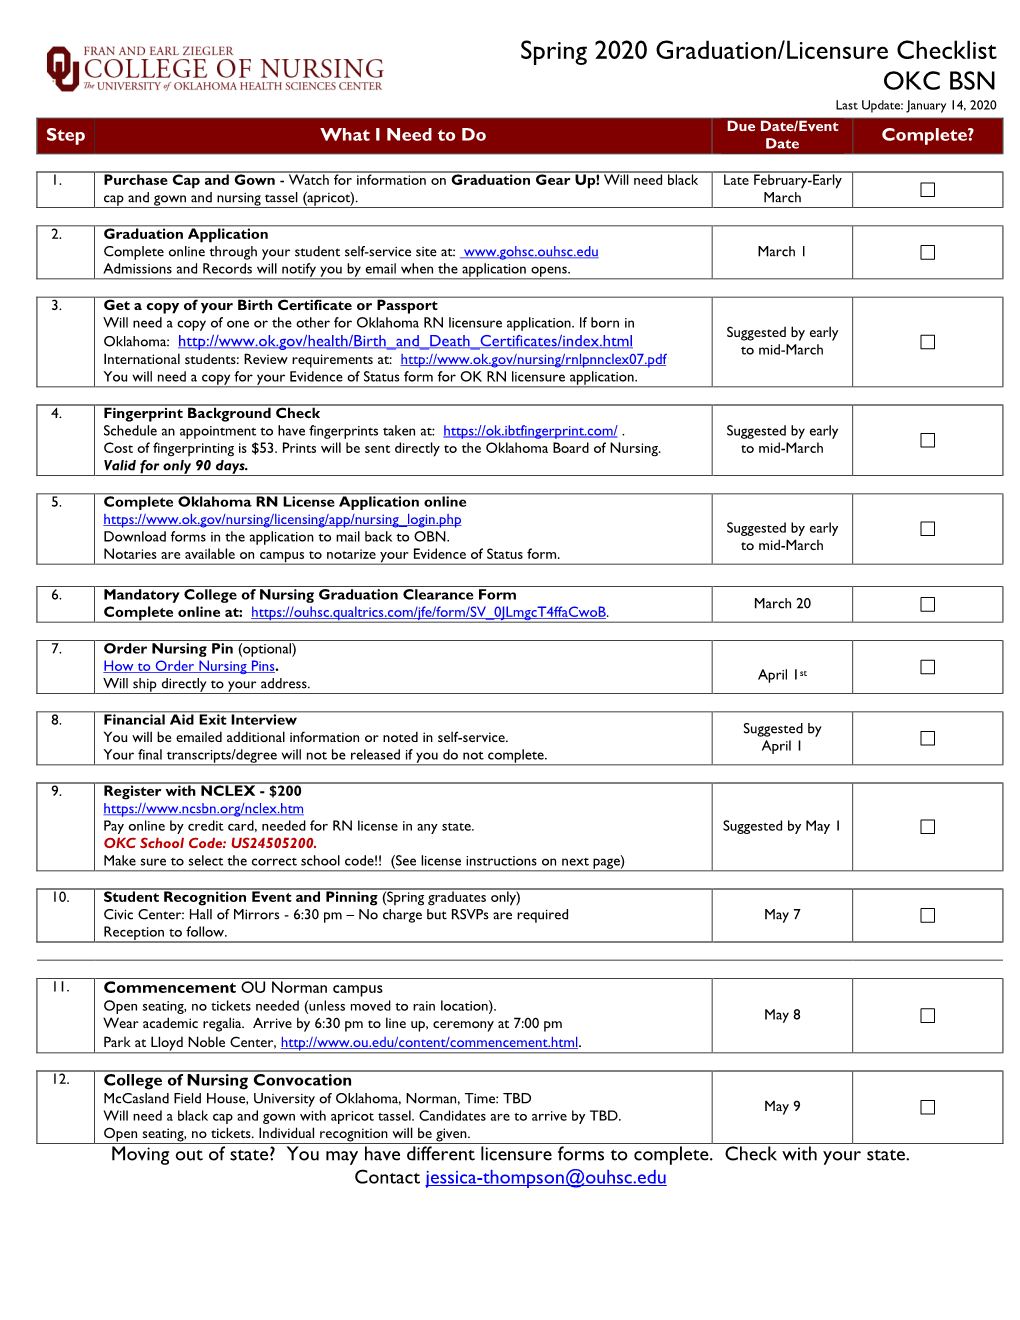 Spring 2020 Graduation/Licensure Checklist OKC BSN Last Update: January 14, 2020